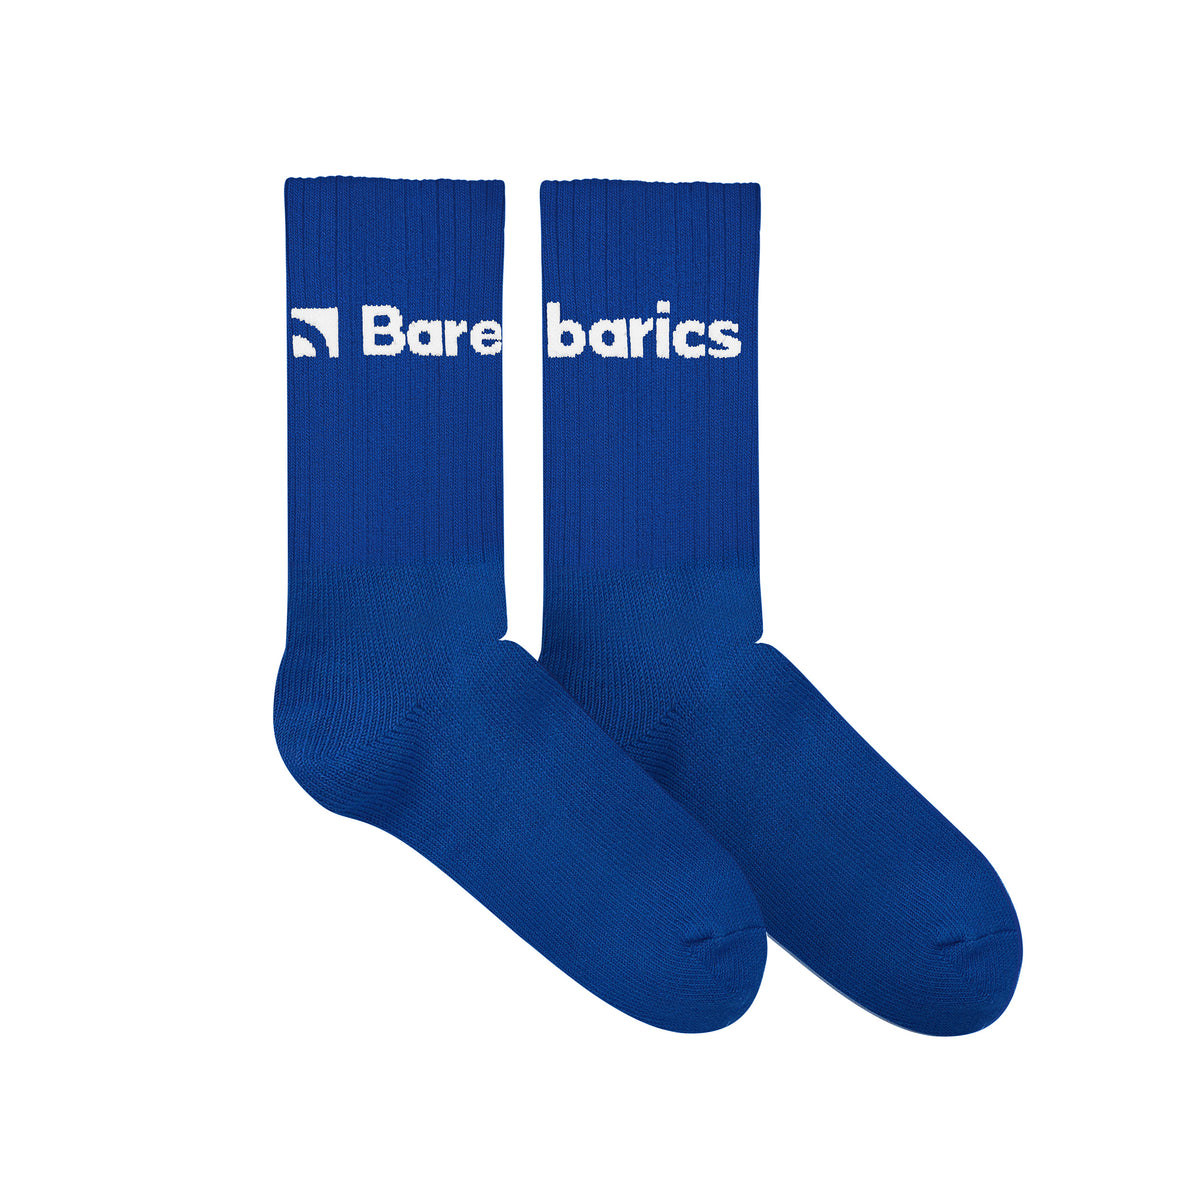 Barebarics - Barefoot Socks - Crew - Cobalt Blue - Big logo 1  - OzBarefoot